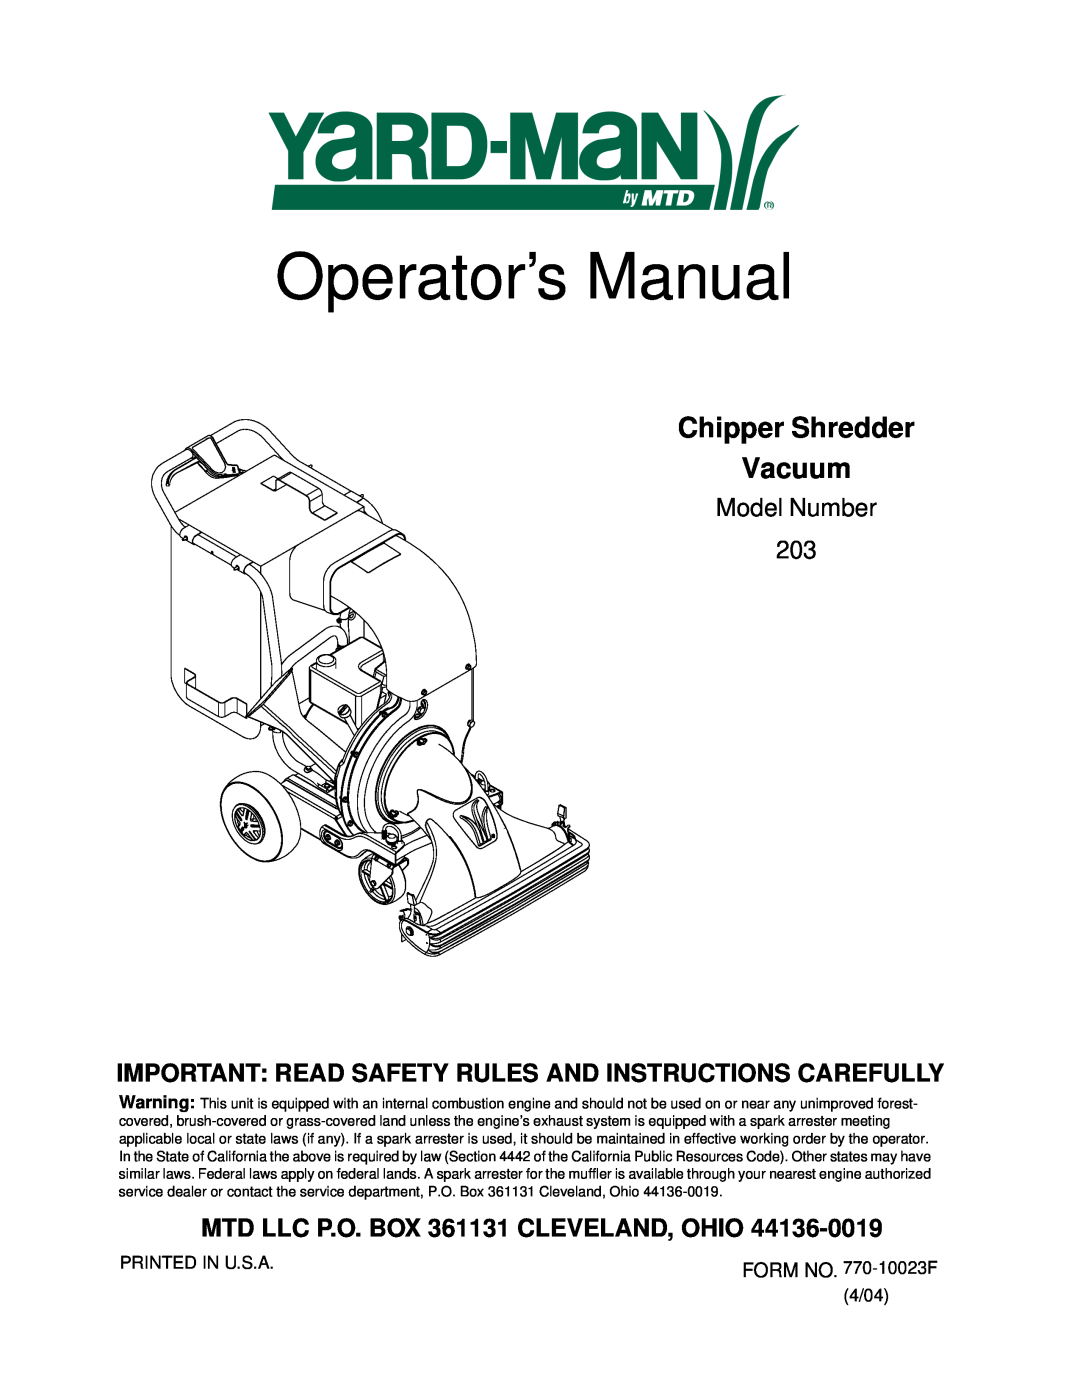 Yard-Man 203 manual Operator’s Manual, Chipper Shredder Vacuum, Model Number, MTD LLC P.O. BOX 361131 CLEVELAND, OHIO 